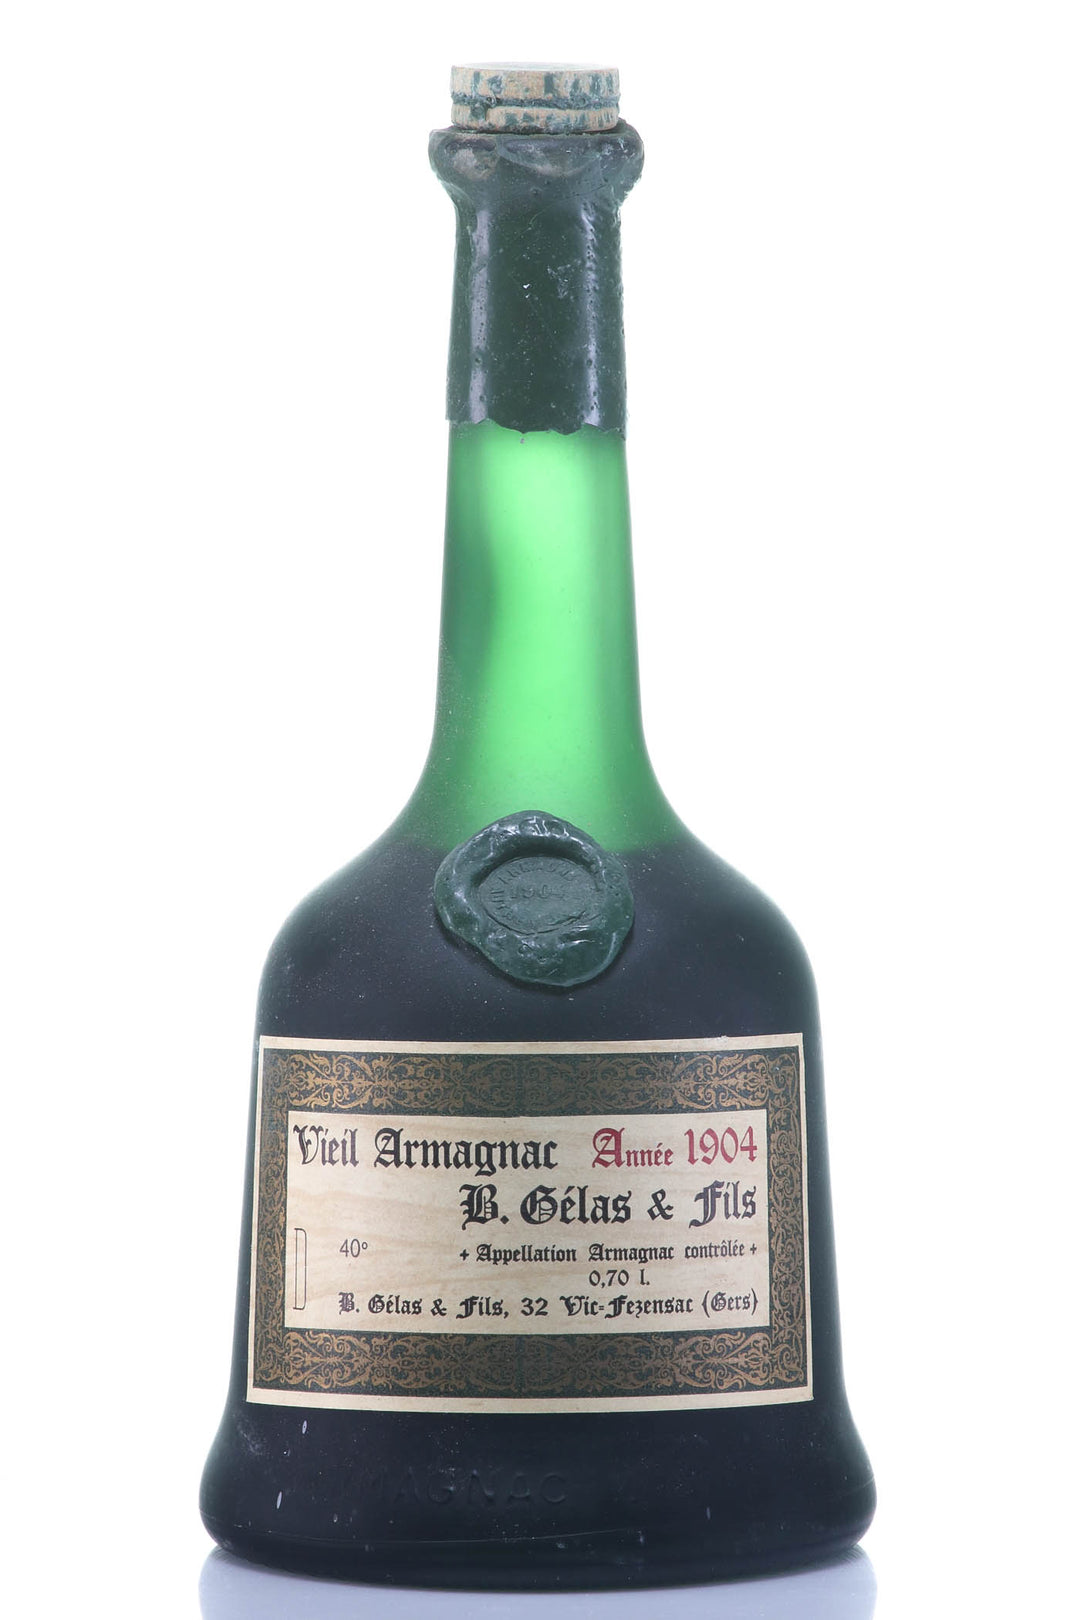 Gelas & Fils 1904 Vieil Armagnac - Rue Pinard